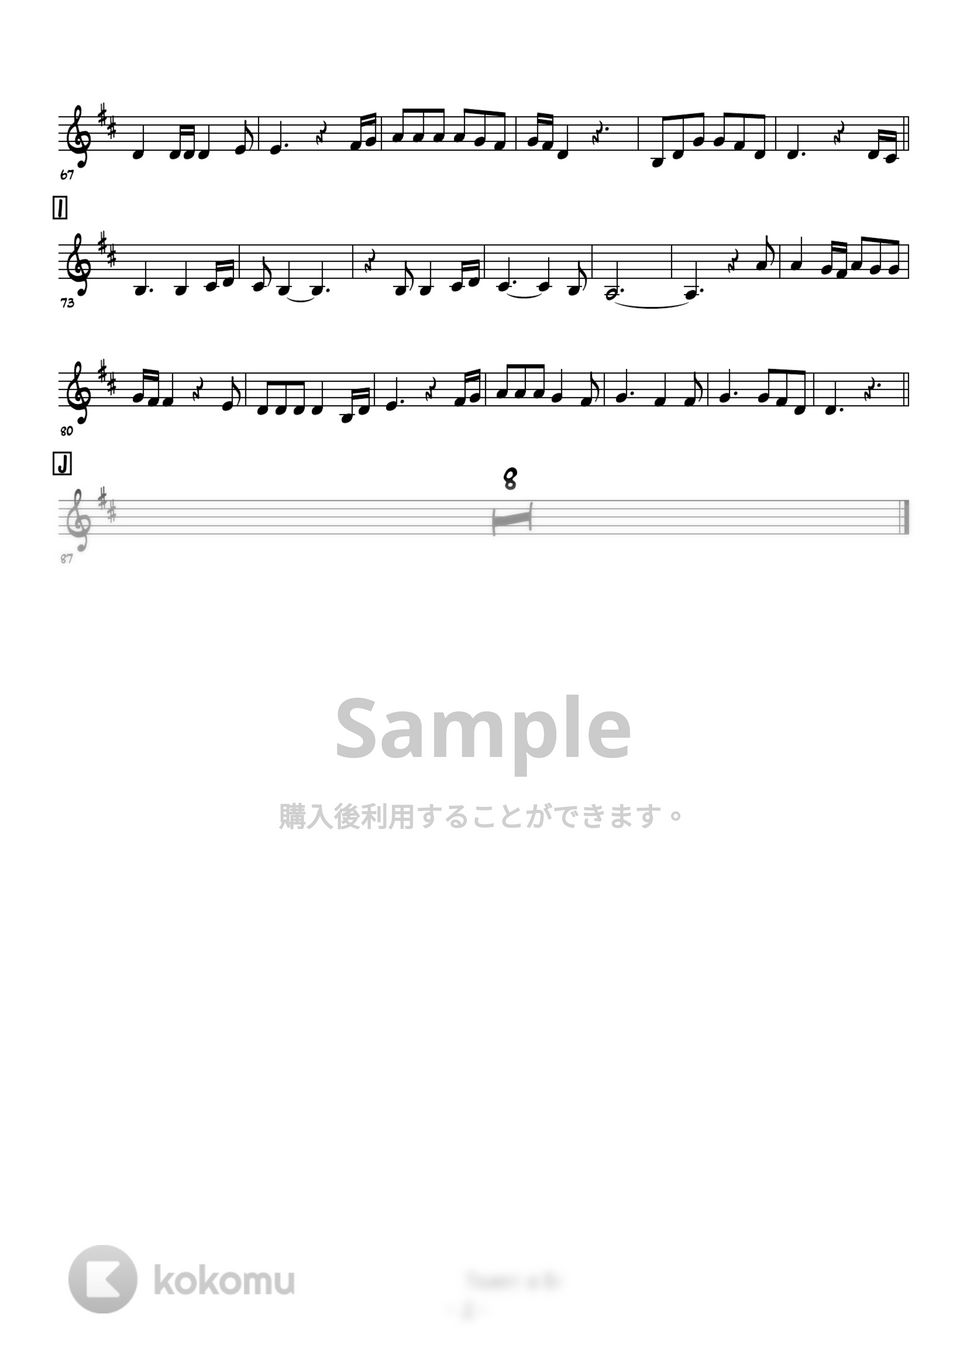 Billy Joel - Piano Man (トランペットメロディー楽譜) by 高田将利